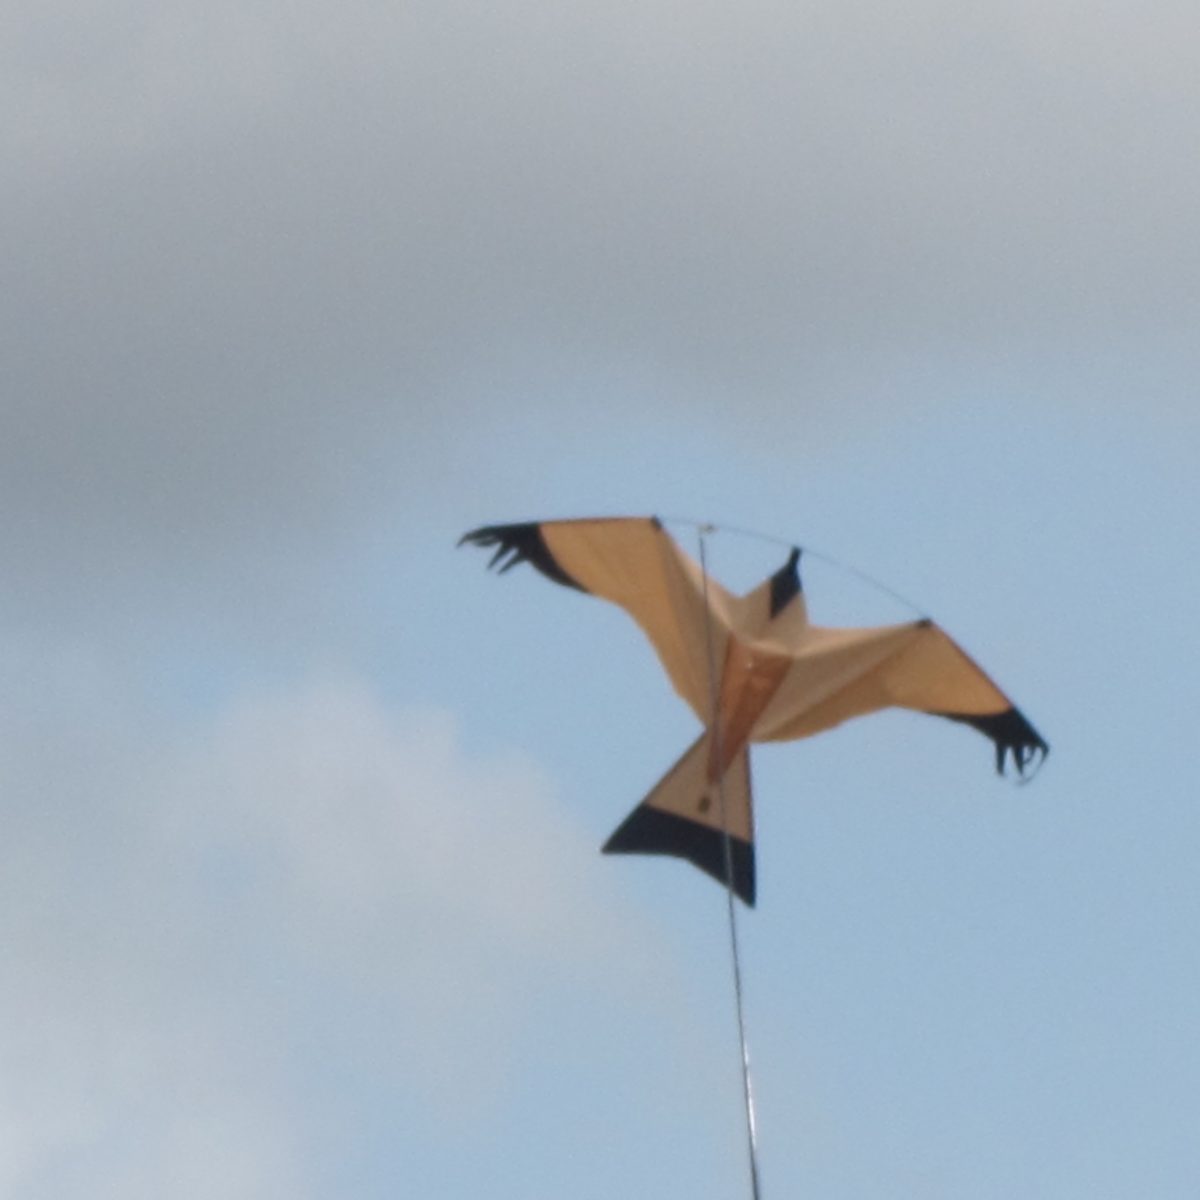 Bristol, Bird kite